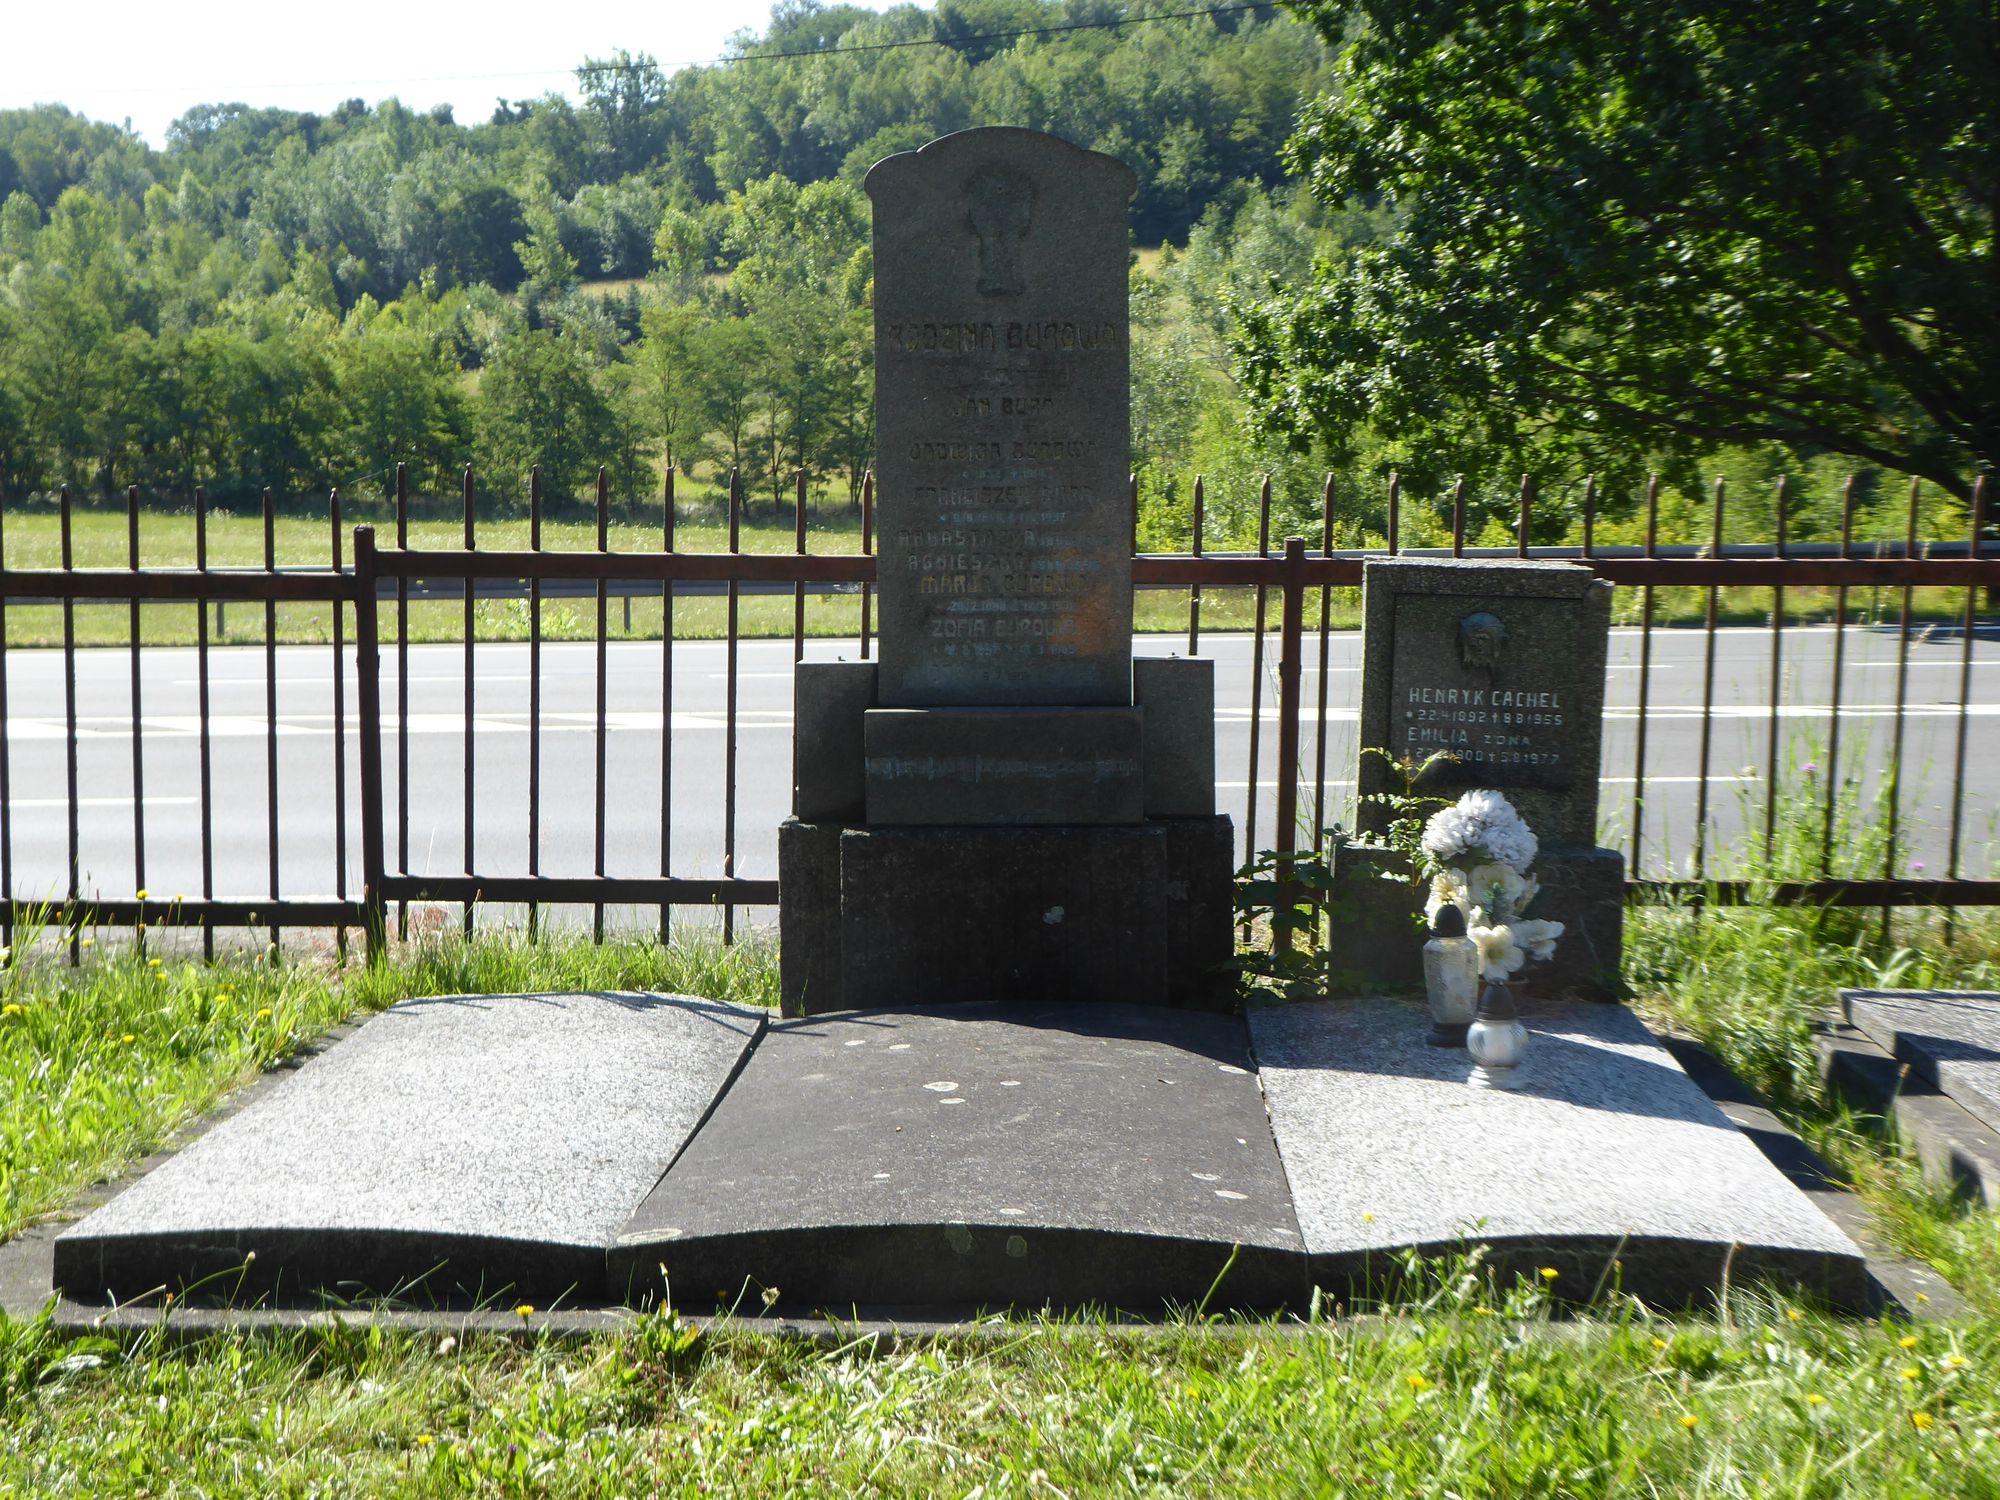 Tombstone of the Burová family from the cemetery of the Czech part of Těšín Silesia, as of 2022.